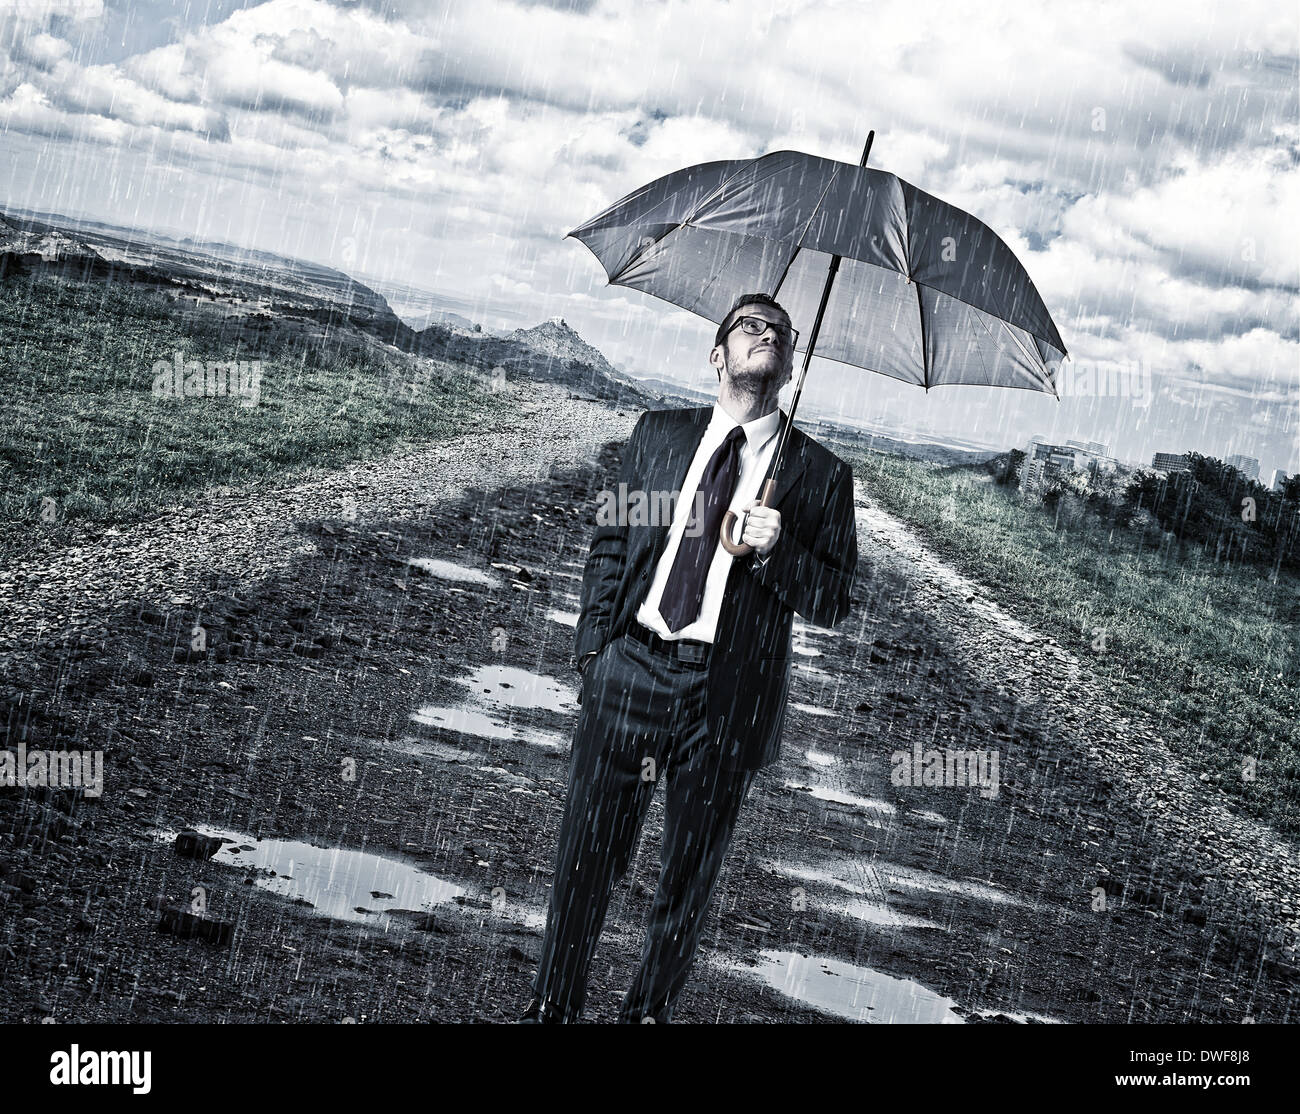 rainy day and man with umbrella on road Stock Photo